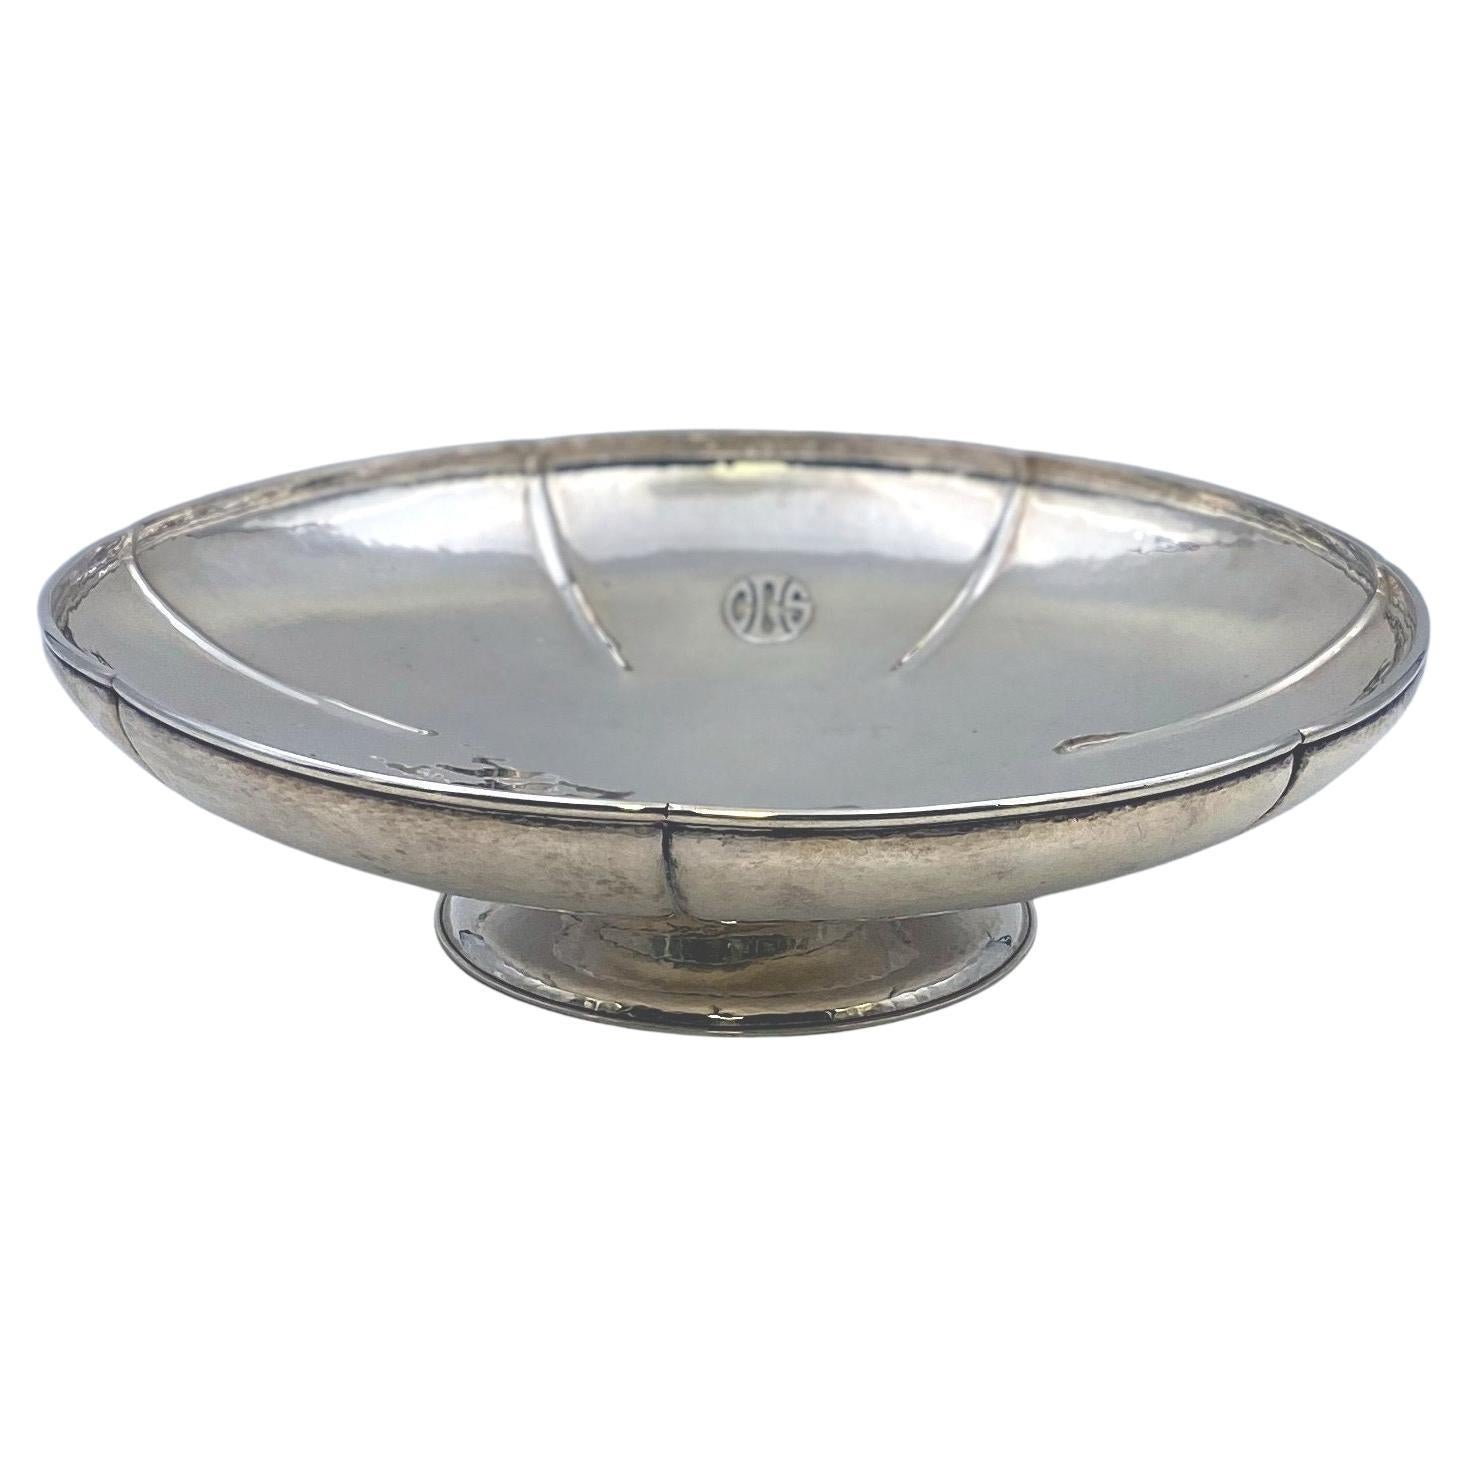 Lebolt & Co. Arts & Crafts Hammered Sterling Silver Compote Centerpiece Bowl For Sale